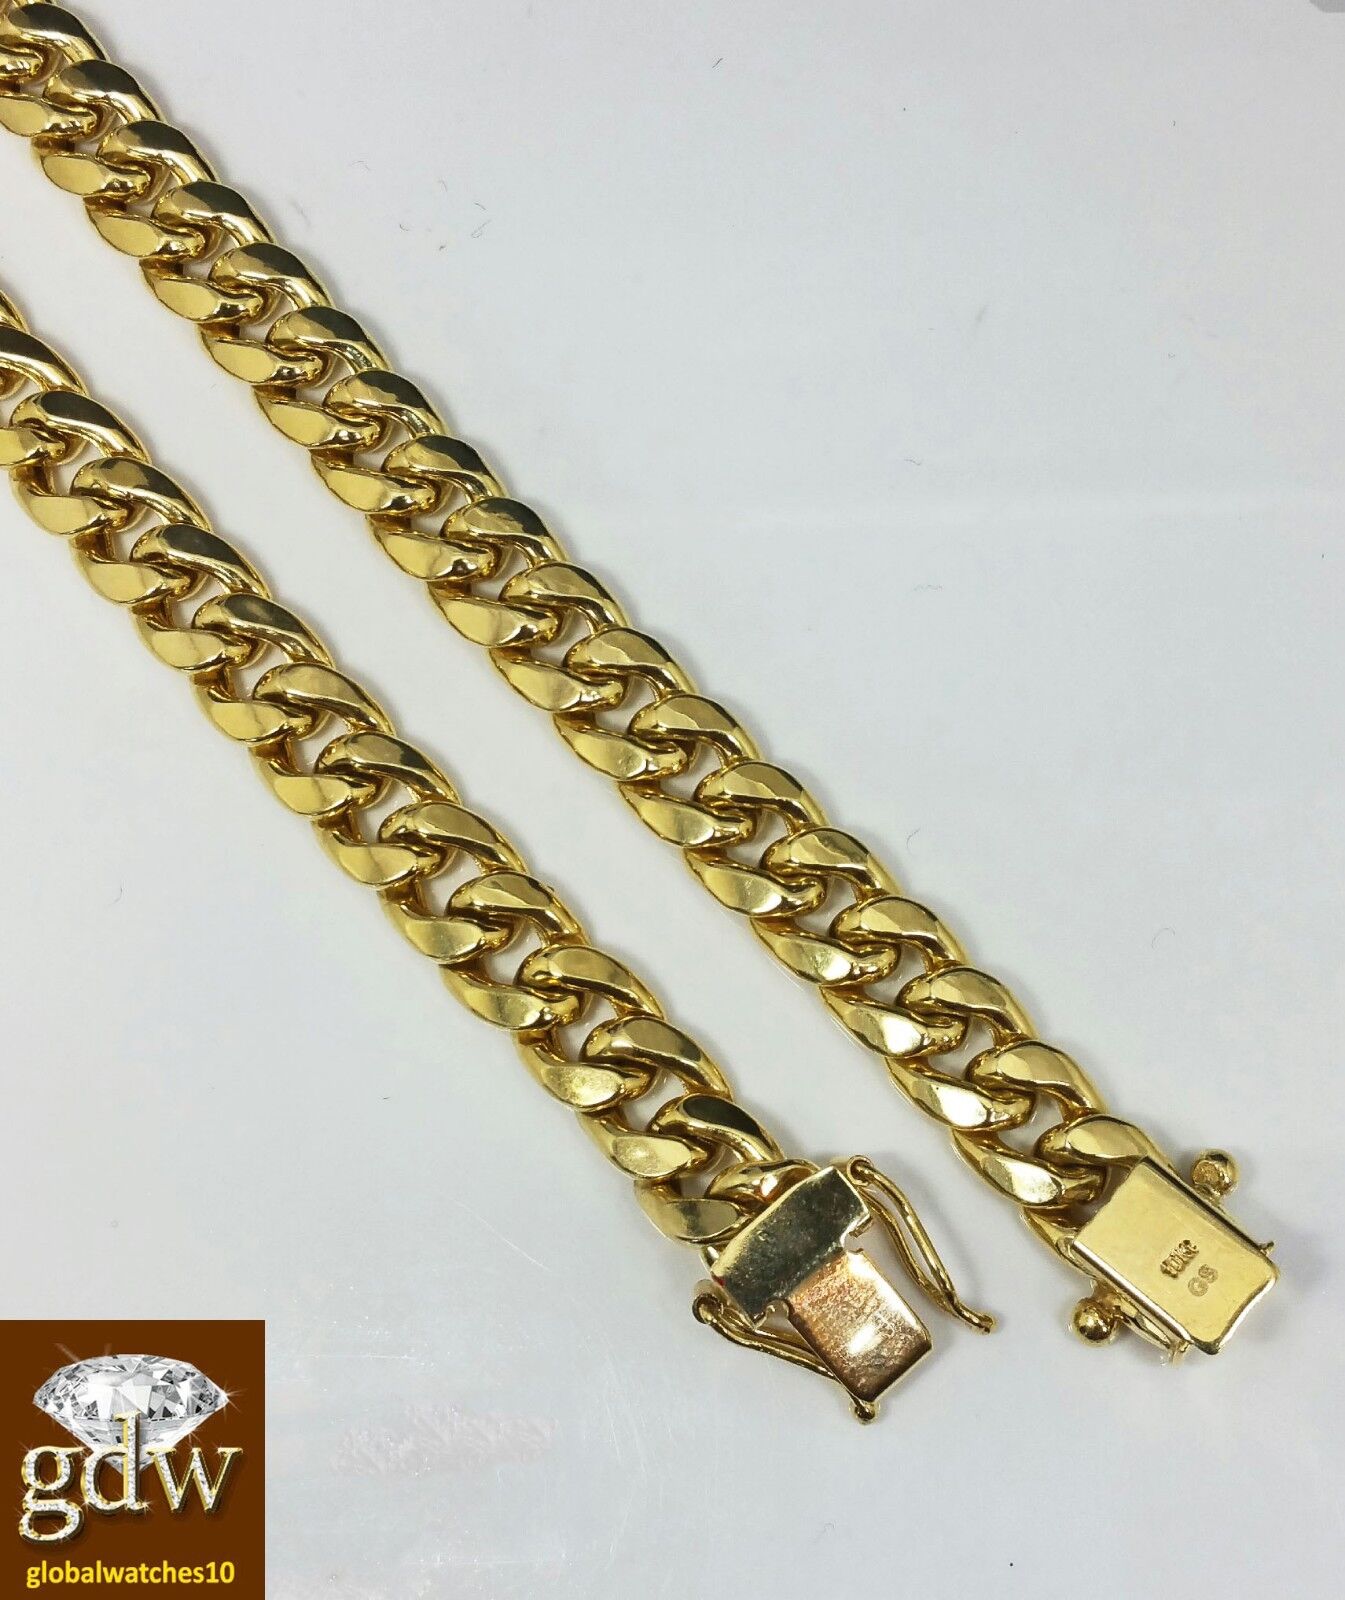 Real Gold Bracelet Men 10k Gold 8 inch Miami Cuban Link Box Lock 10kt 7mm